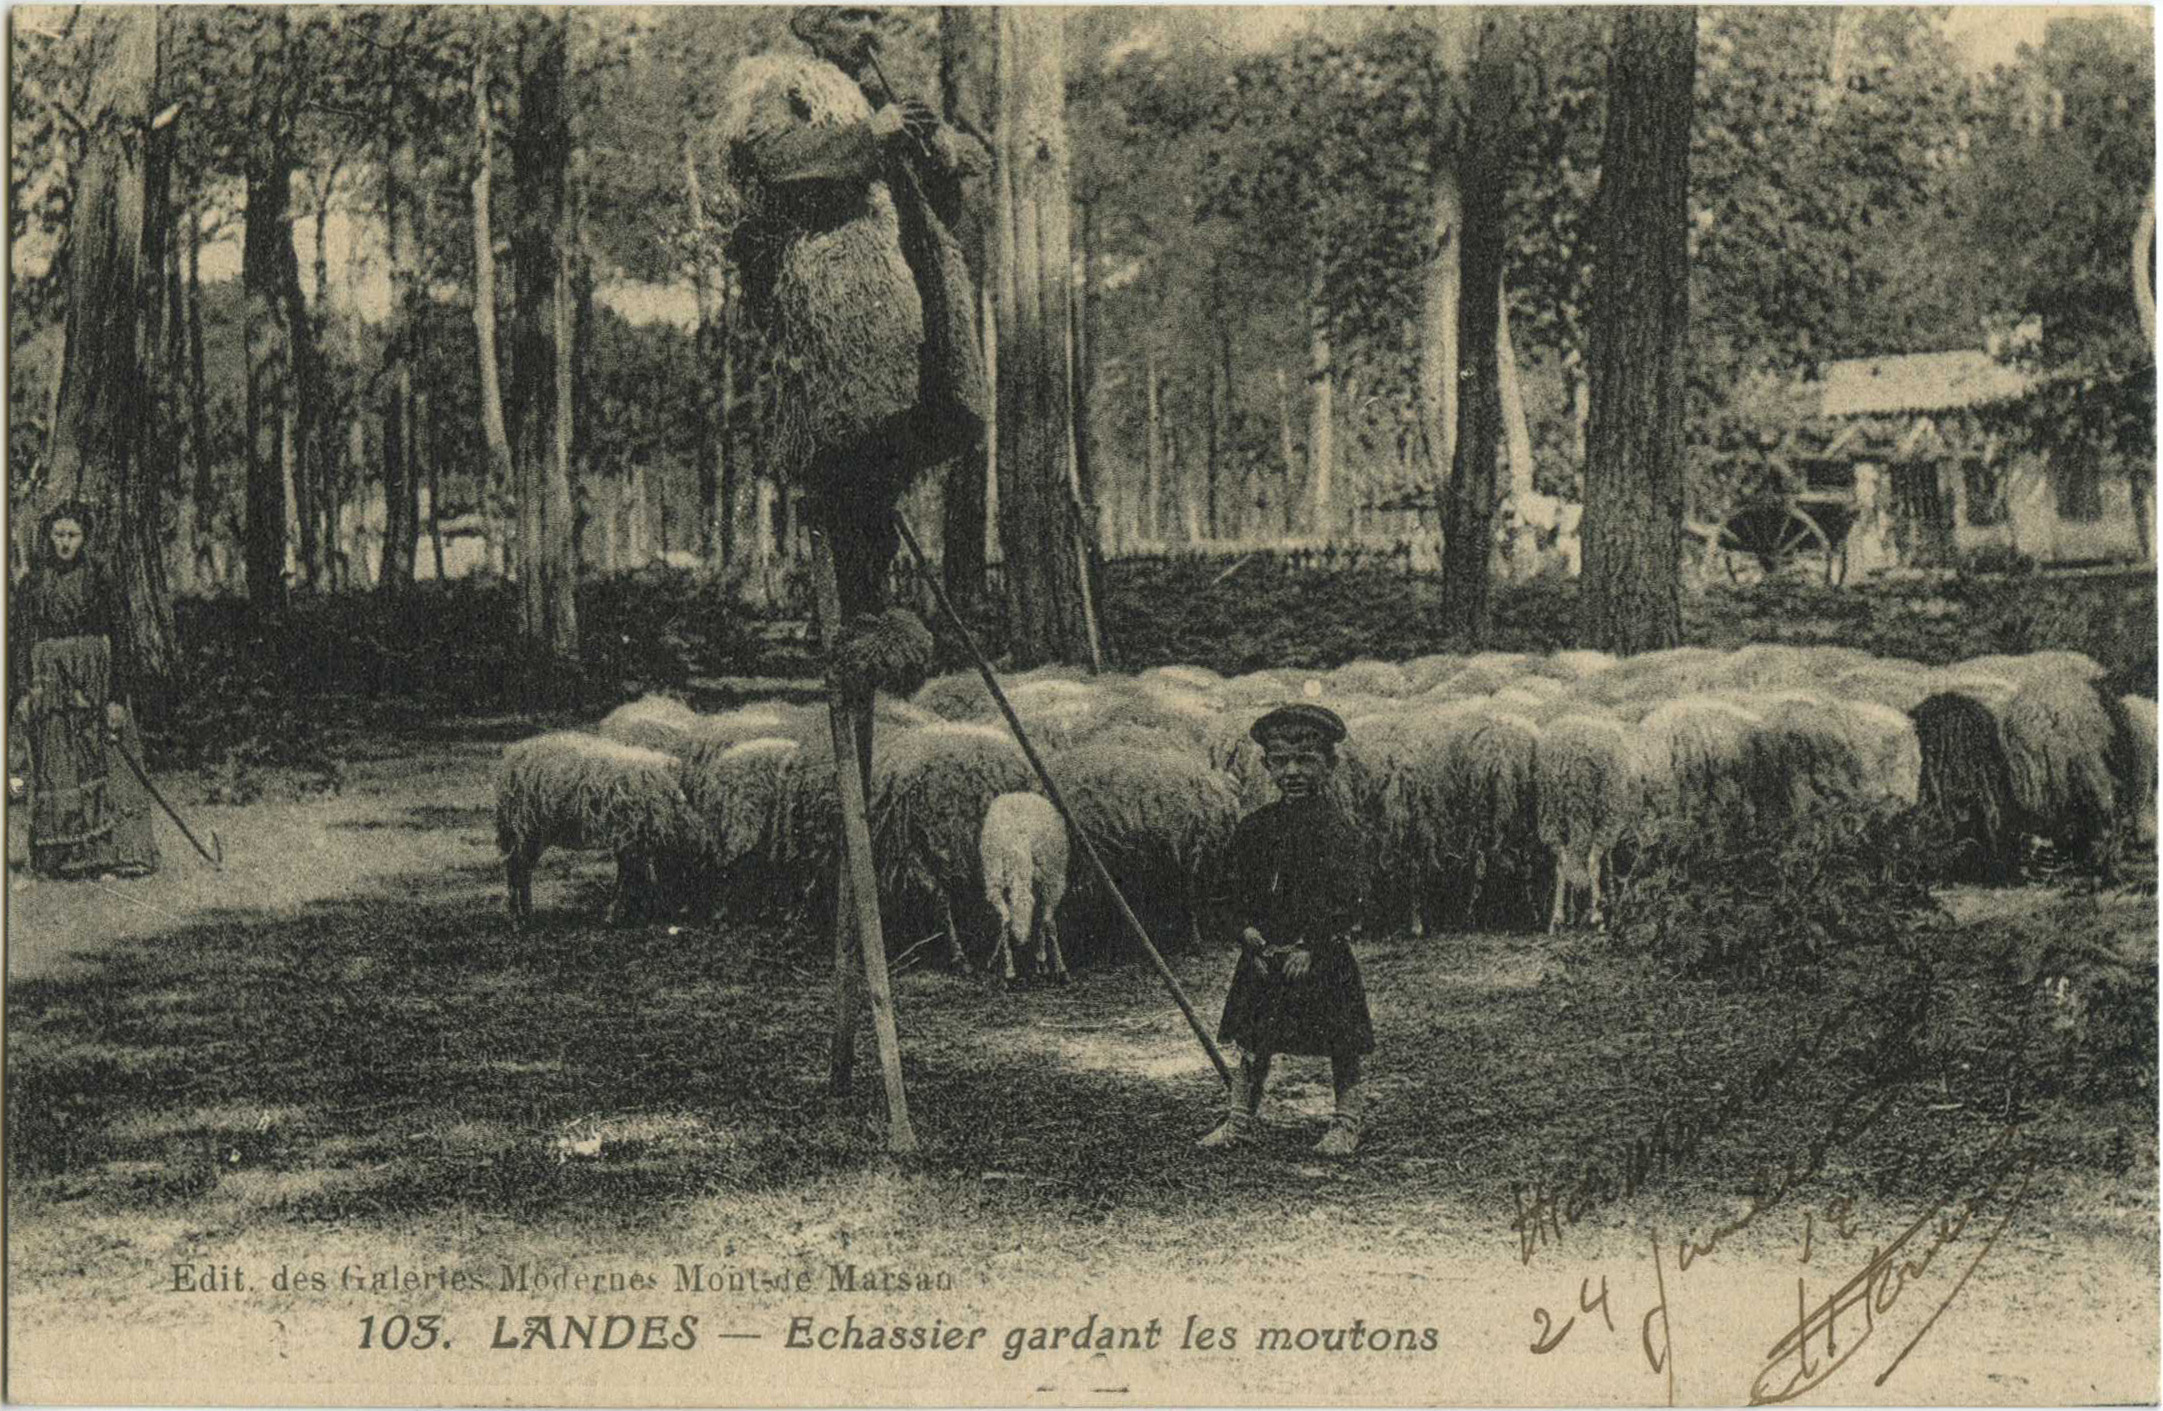 Landes - LANDES - Echassier gardant les moutons